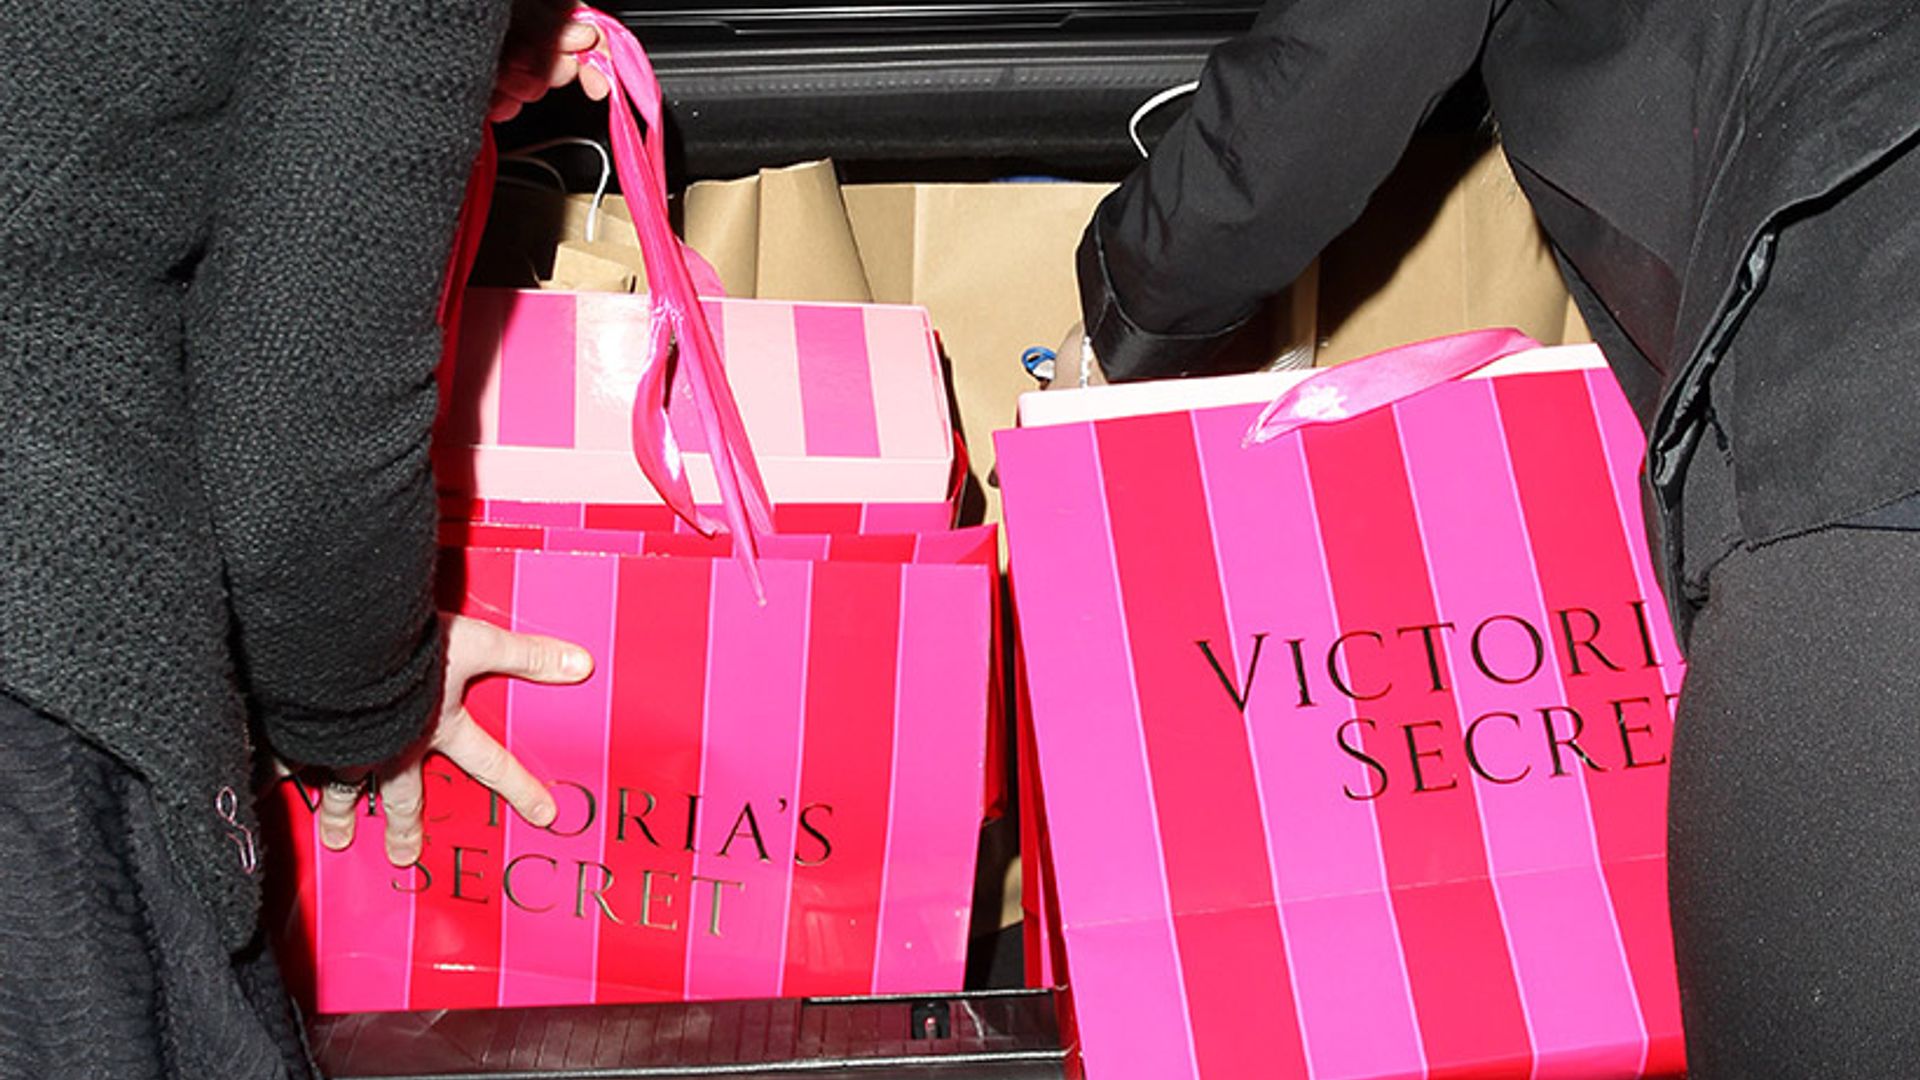 Buy Victoria's Secret Bra from the Victoria's Secret UK online shop